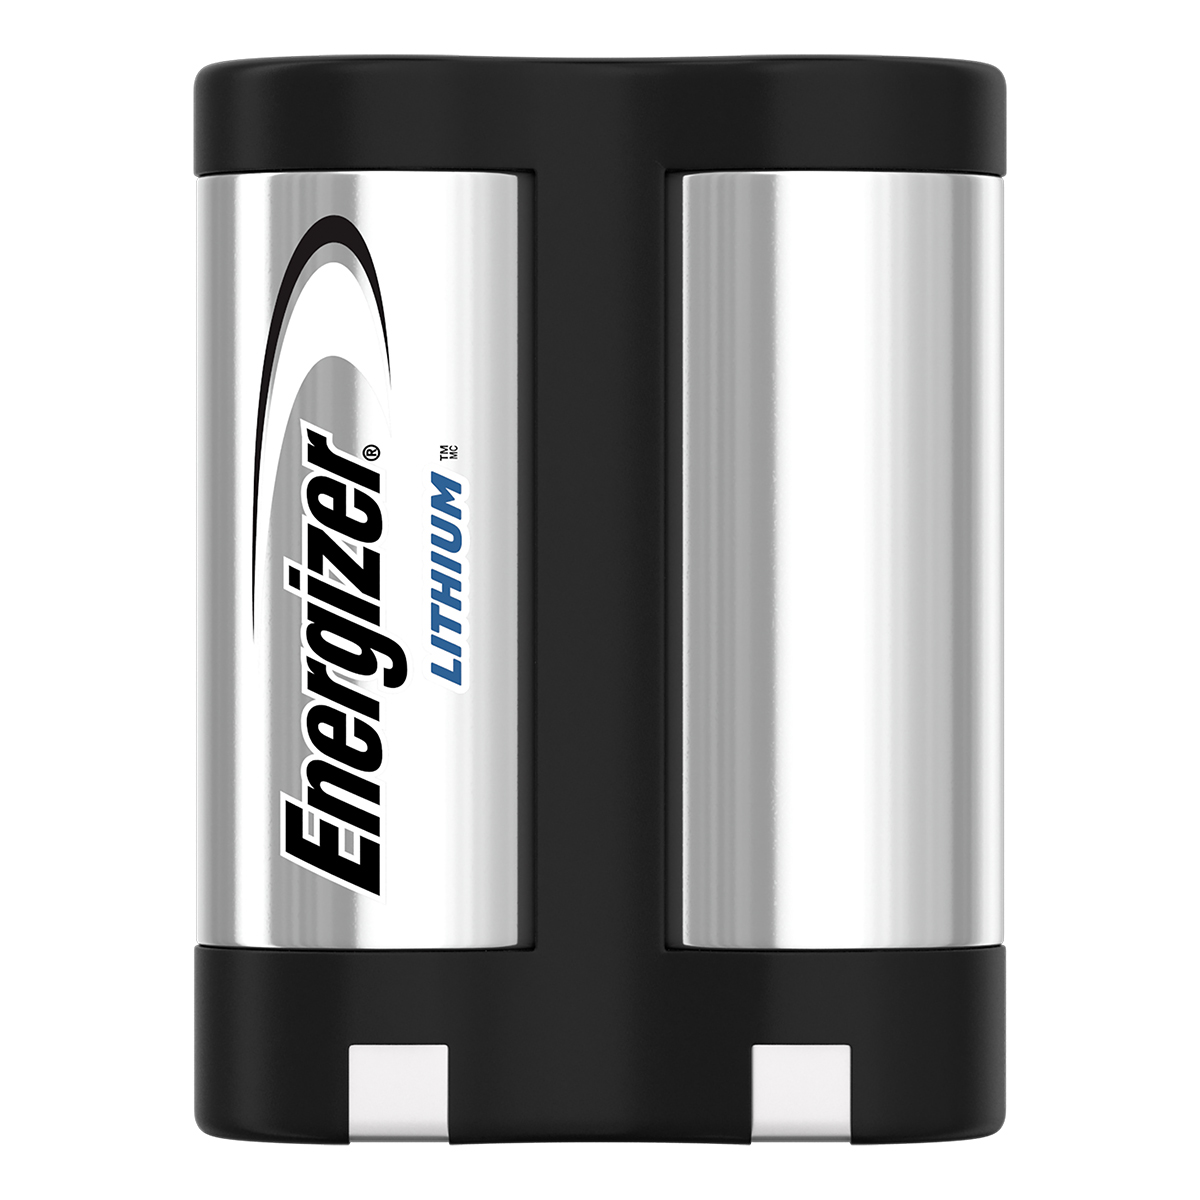 Energizer Lithium Fotobatterien 2CR5